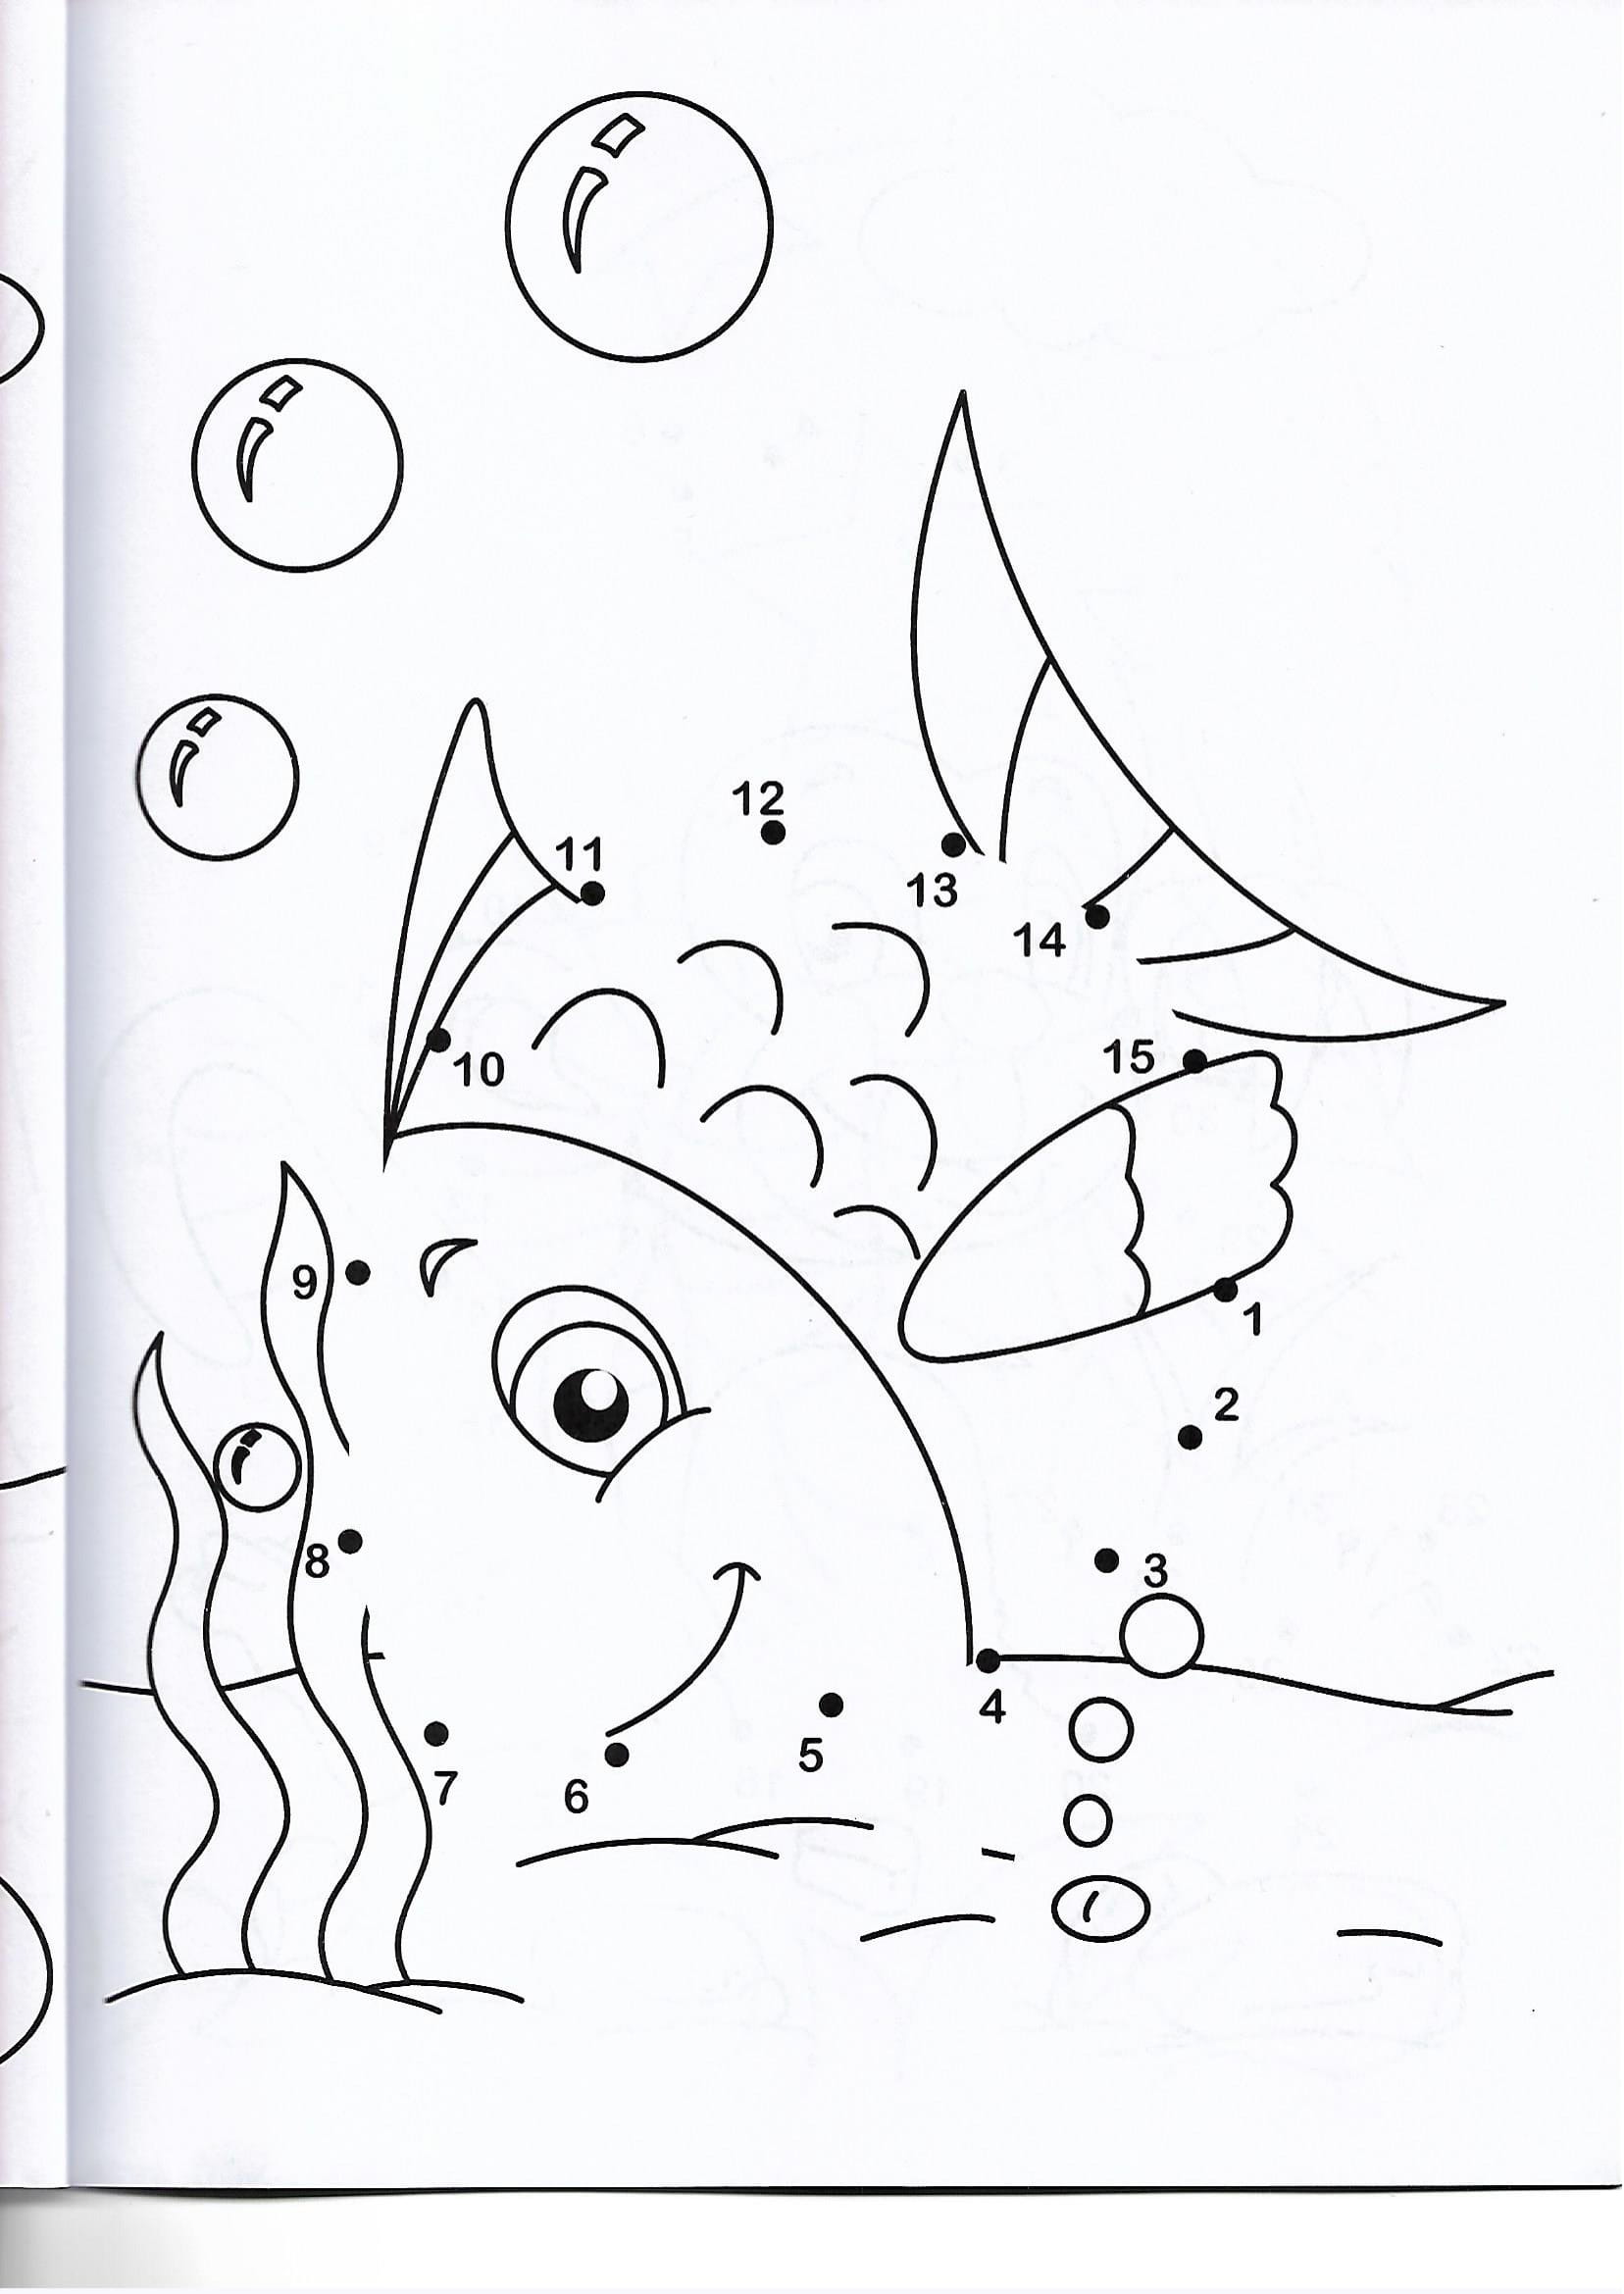 fish-animal-printable-dot-to-dot-connect-the-dots-numbers-1-15-dot